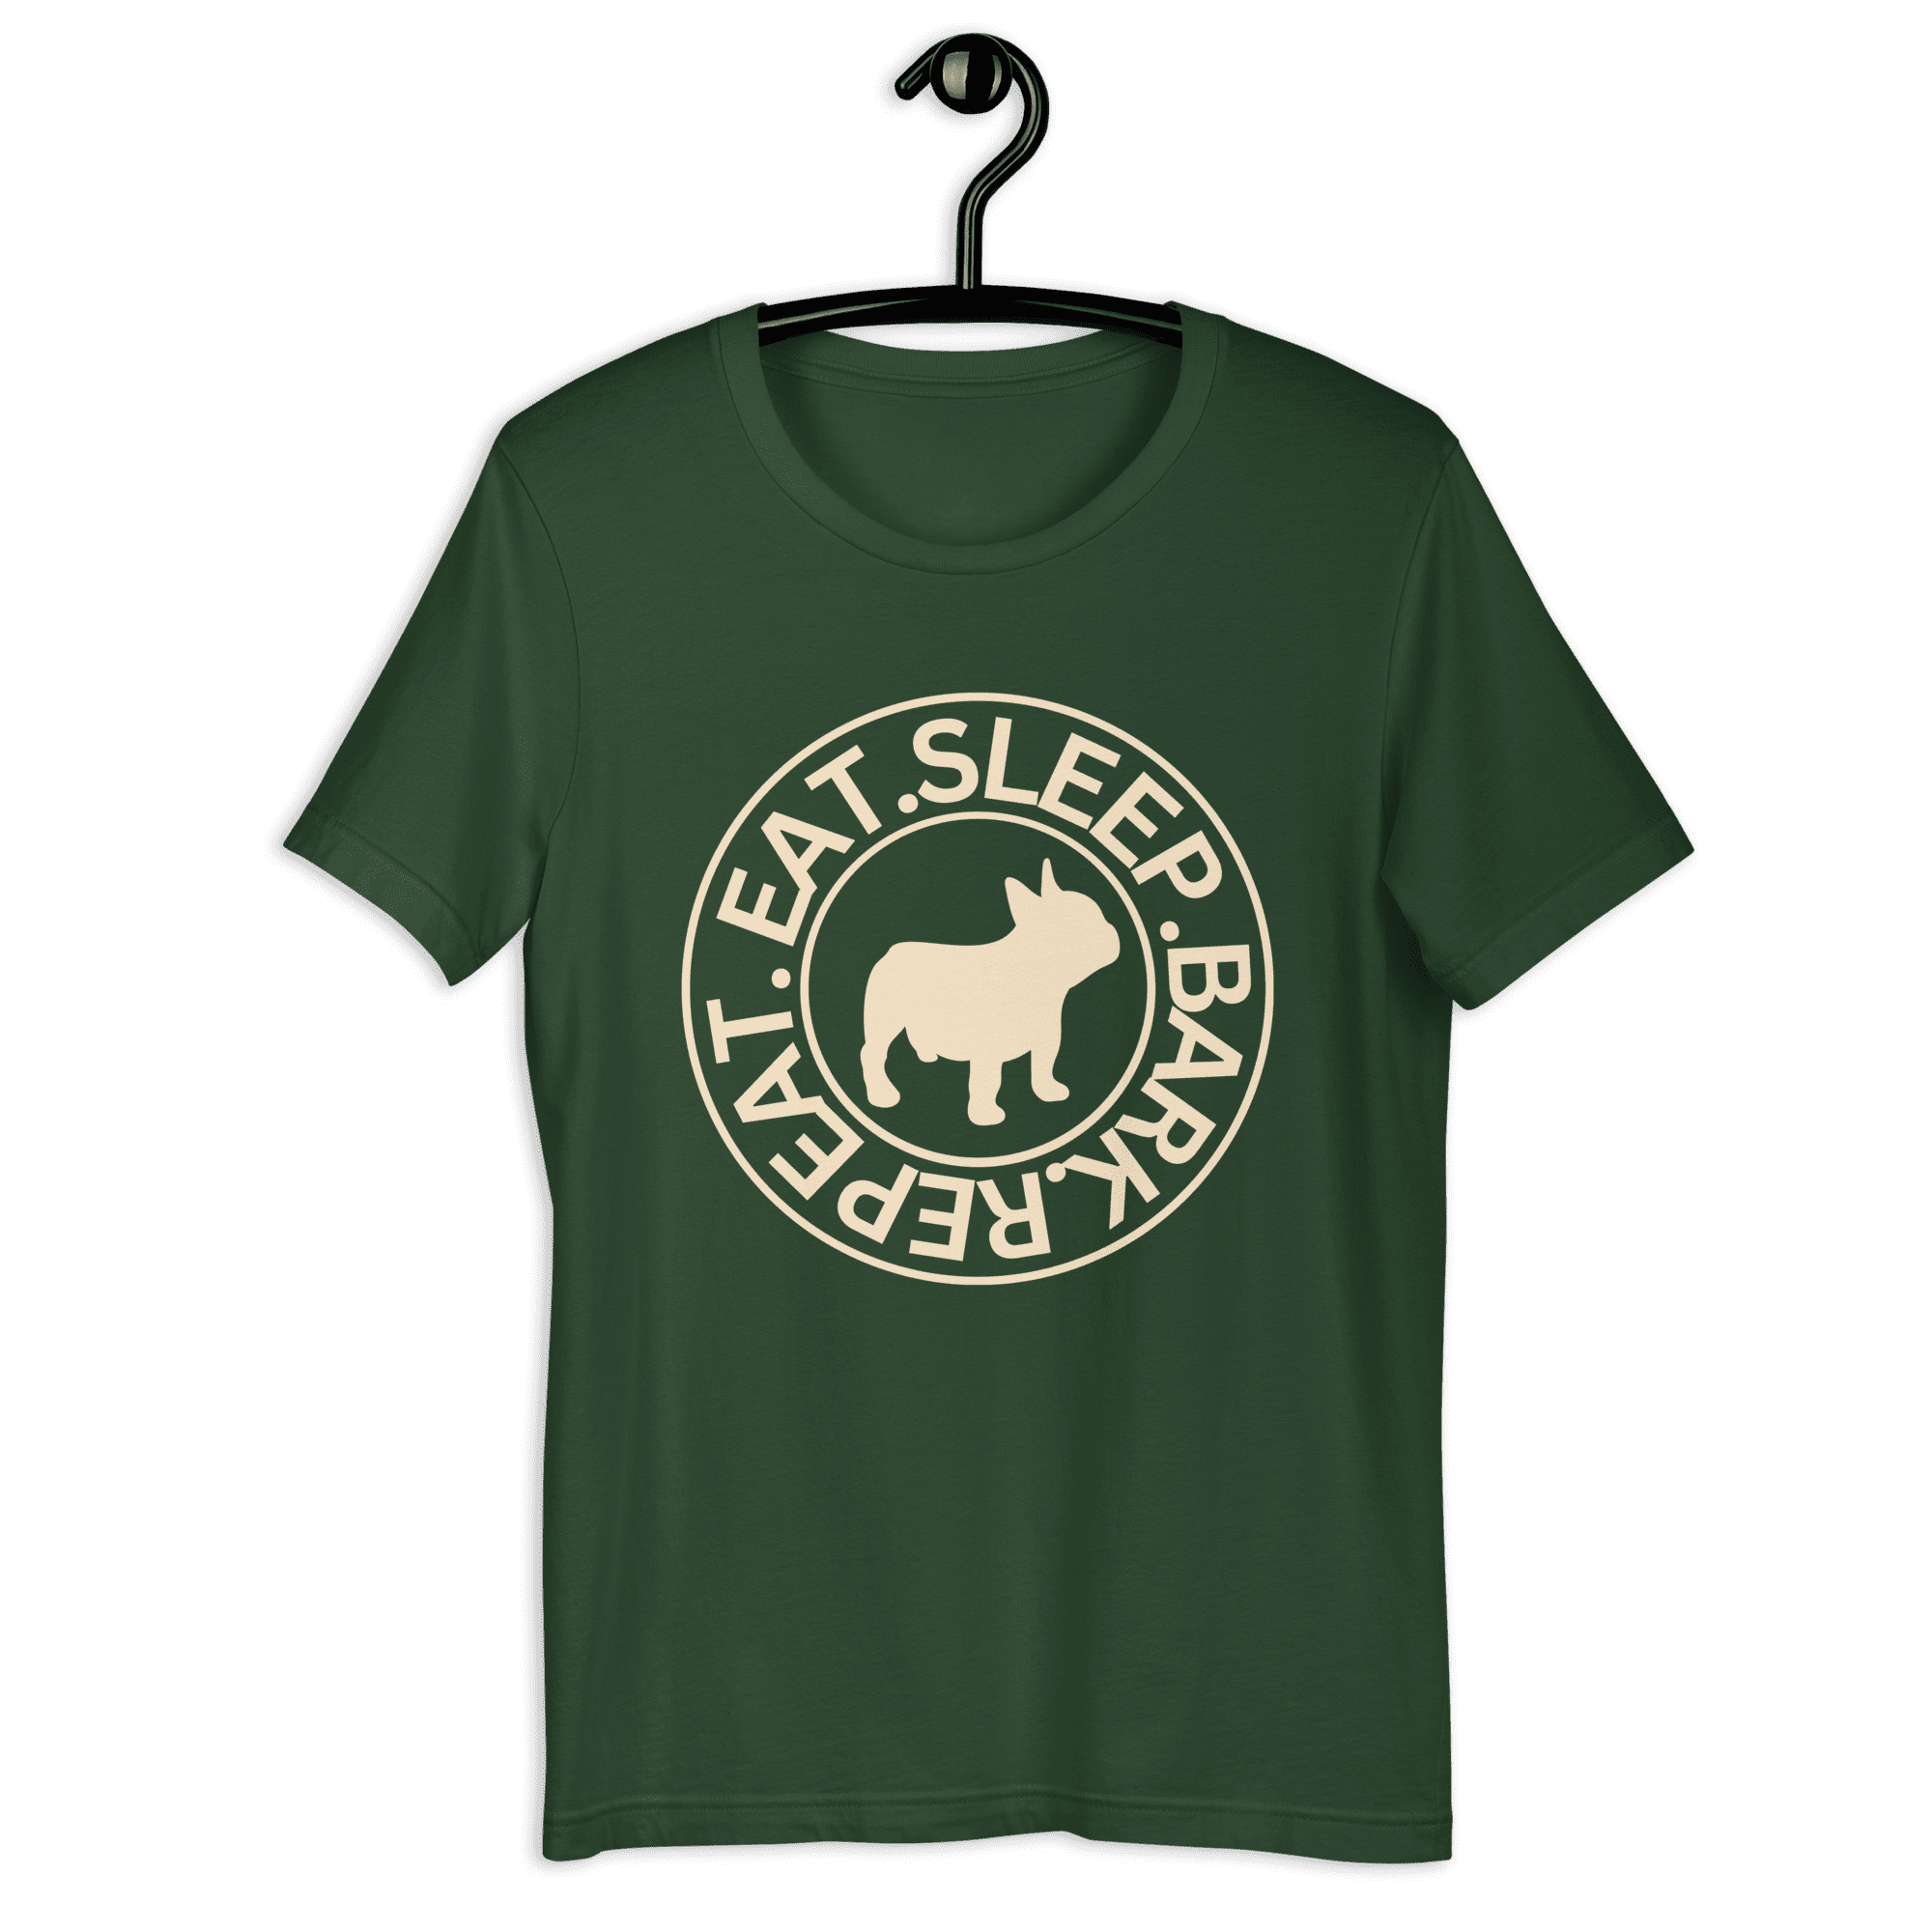 The "Eat Sleep Bark Repeat" French Bulldog Unisex T-Shirt. Forest Green